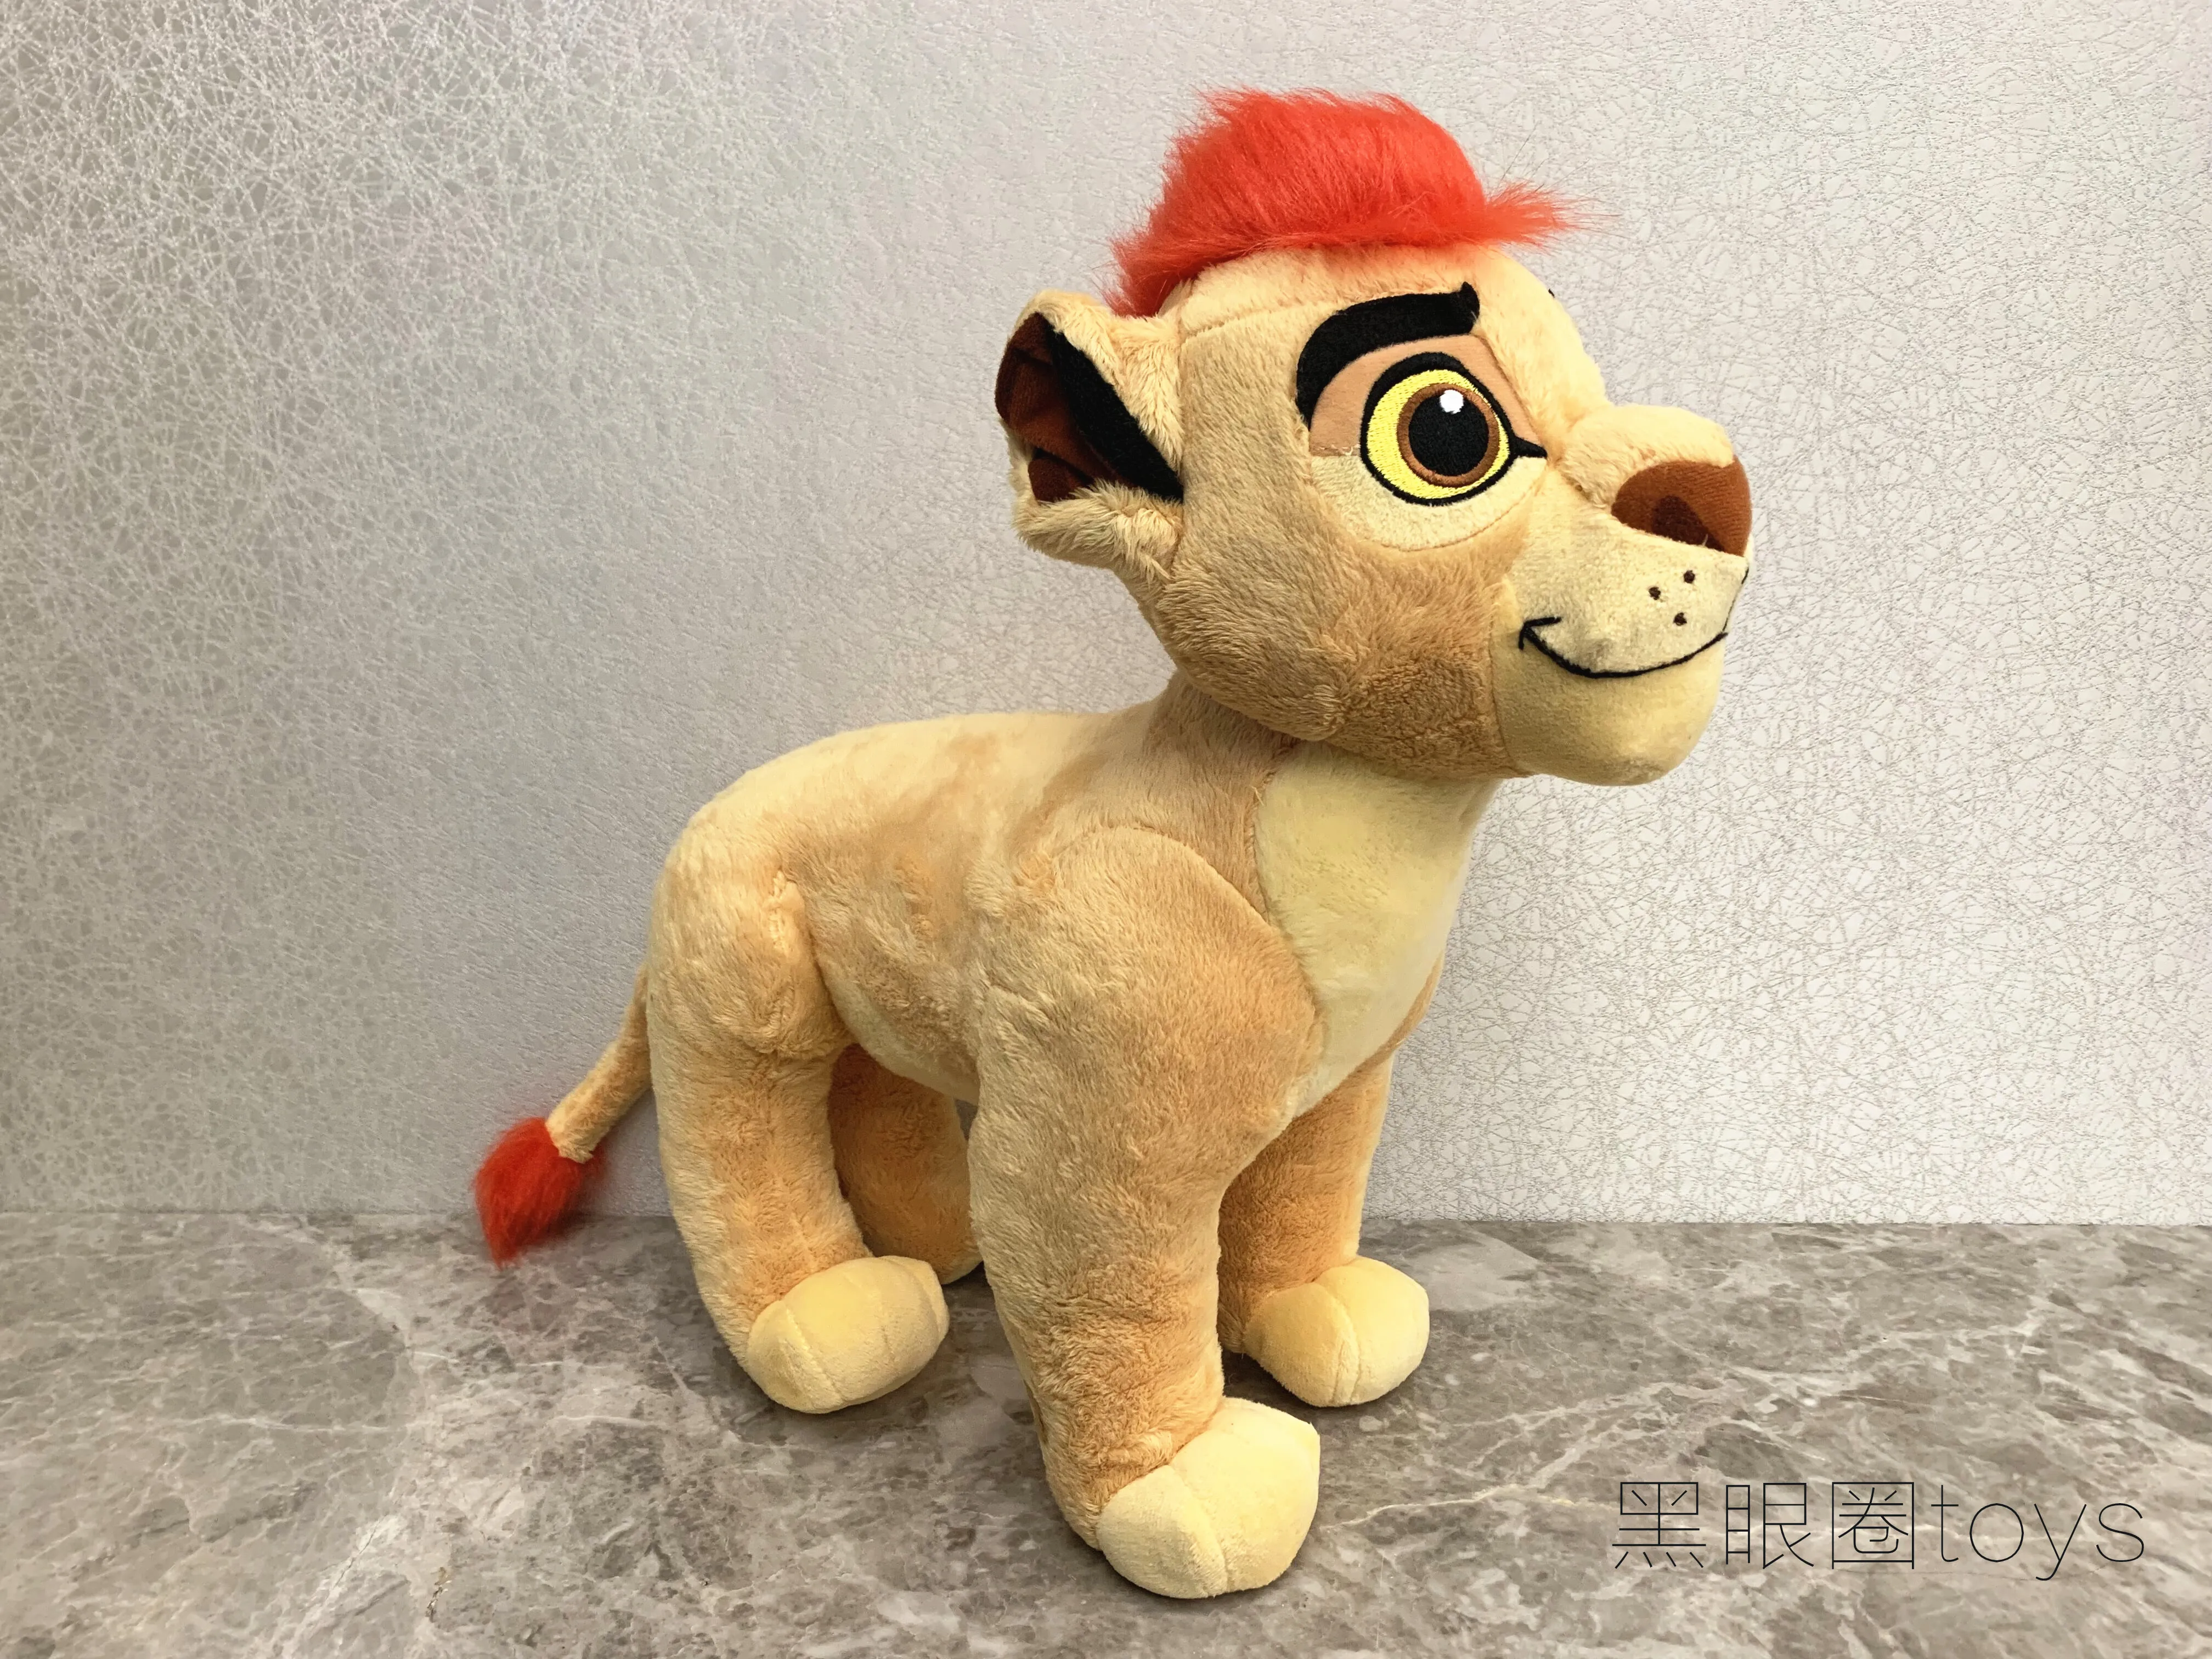 Son of Simba Disney Large 24 inch Plush KION The Lion Guard Stuffed Animal 